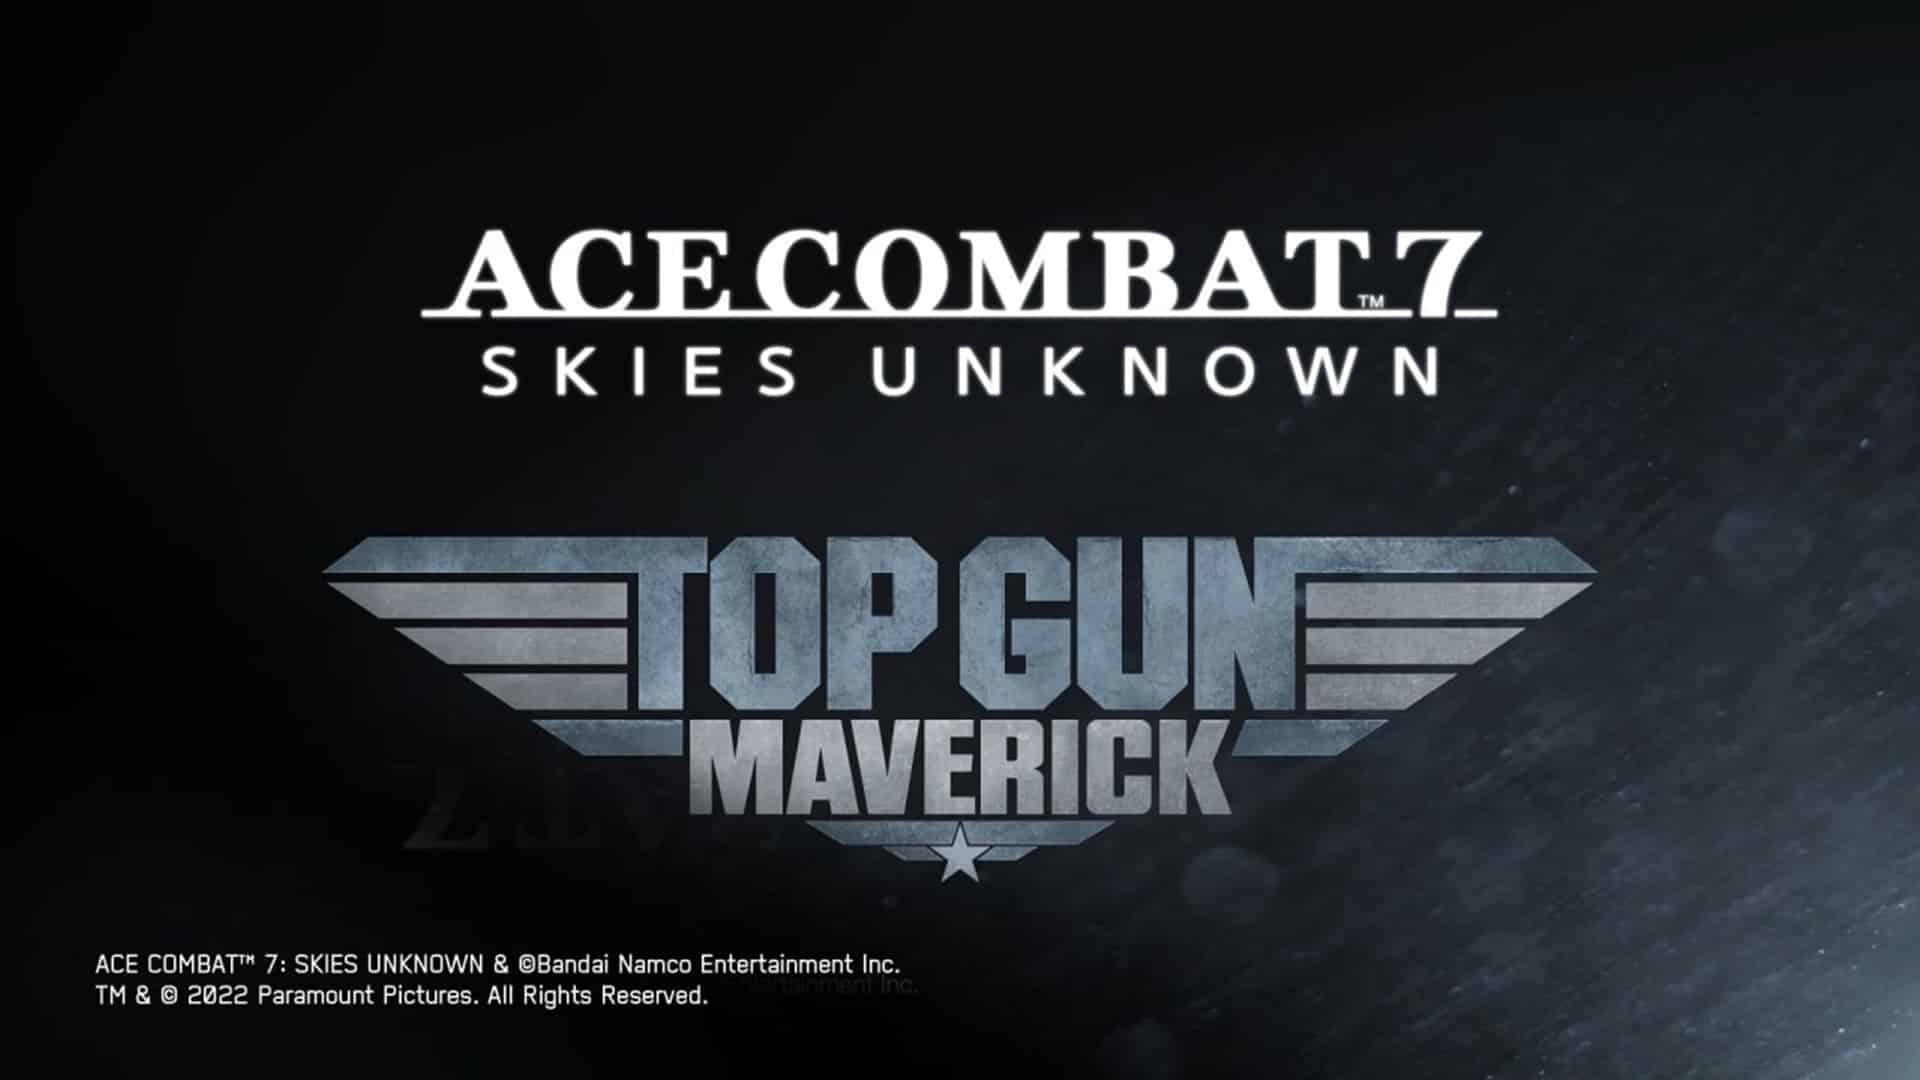 Ace Combat 7 Skies Unknown tendrá un DLC colaborativo con Top Gun Maverick, GamersRD